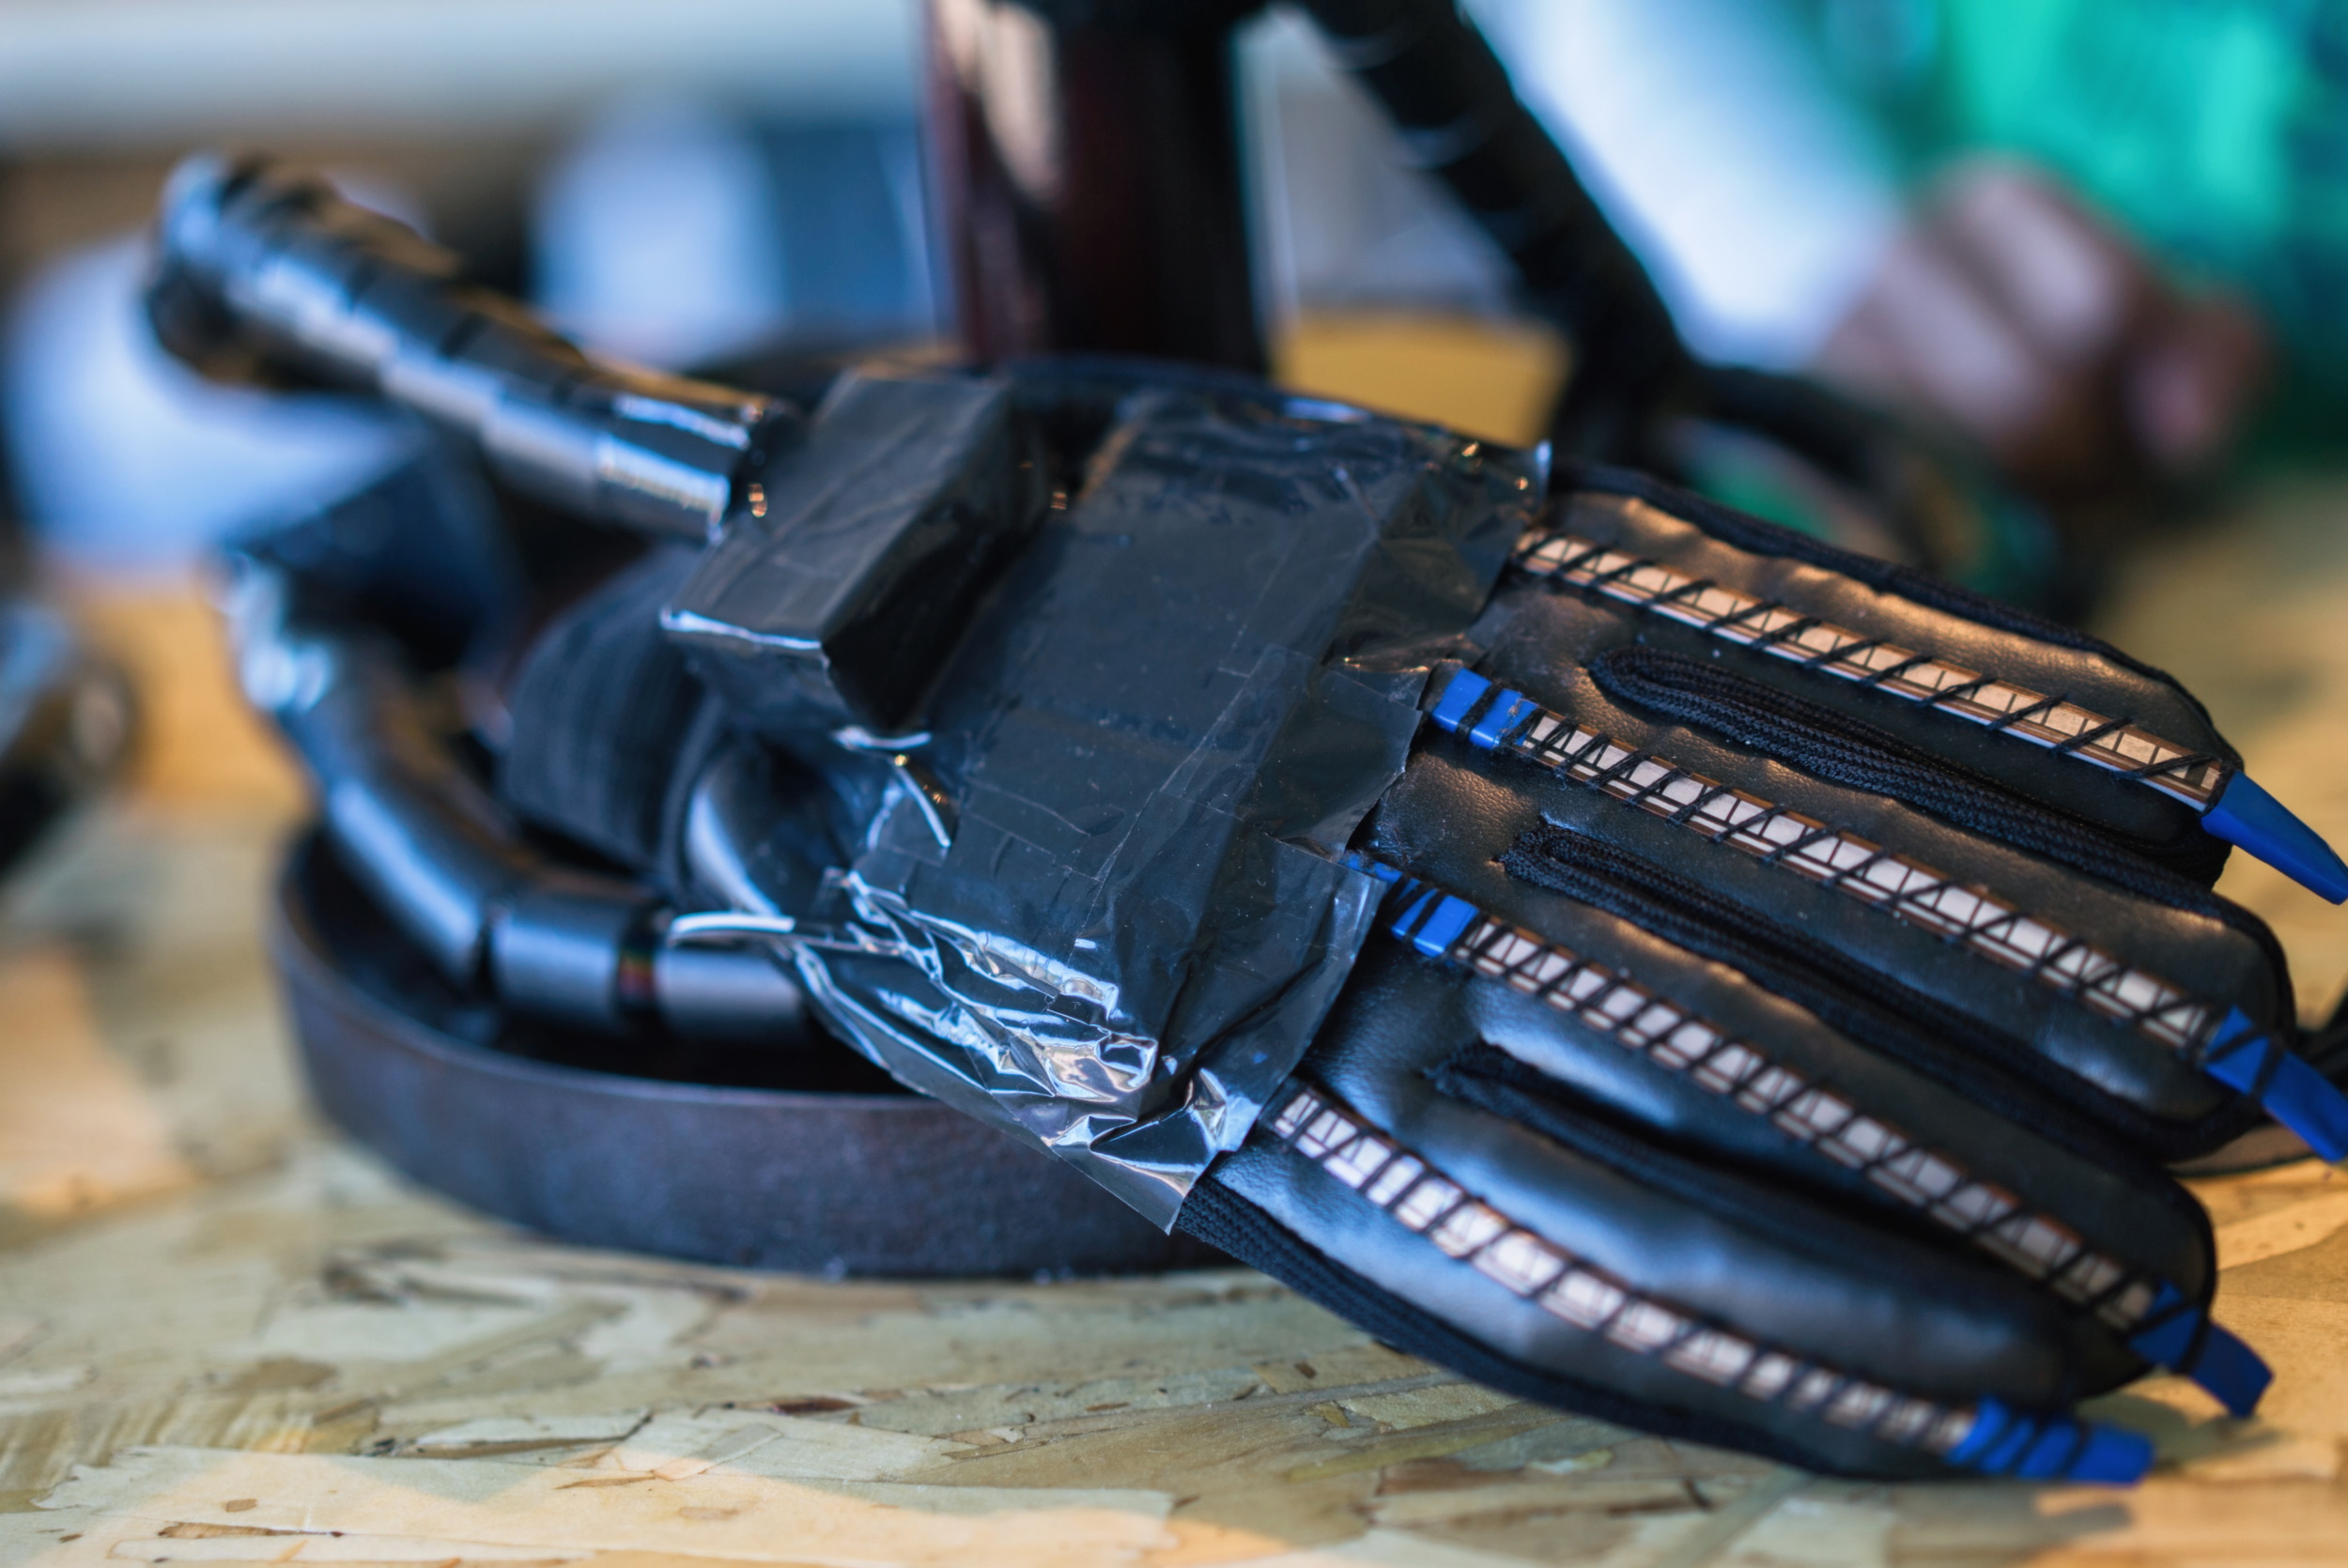 V Bionic 的全覆盖外骨骼手套。